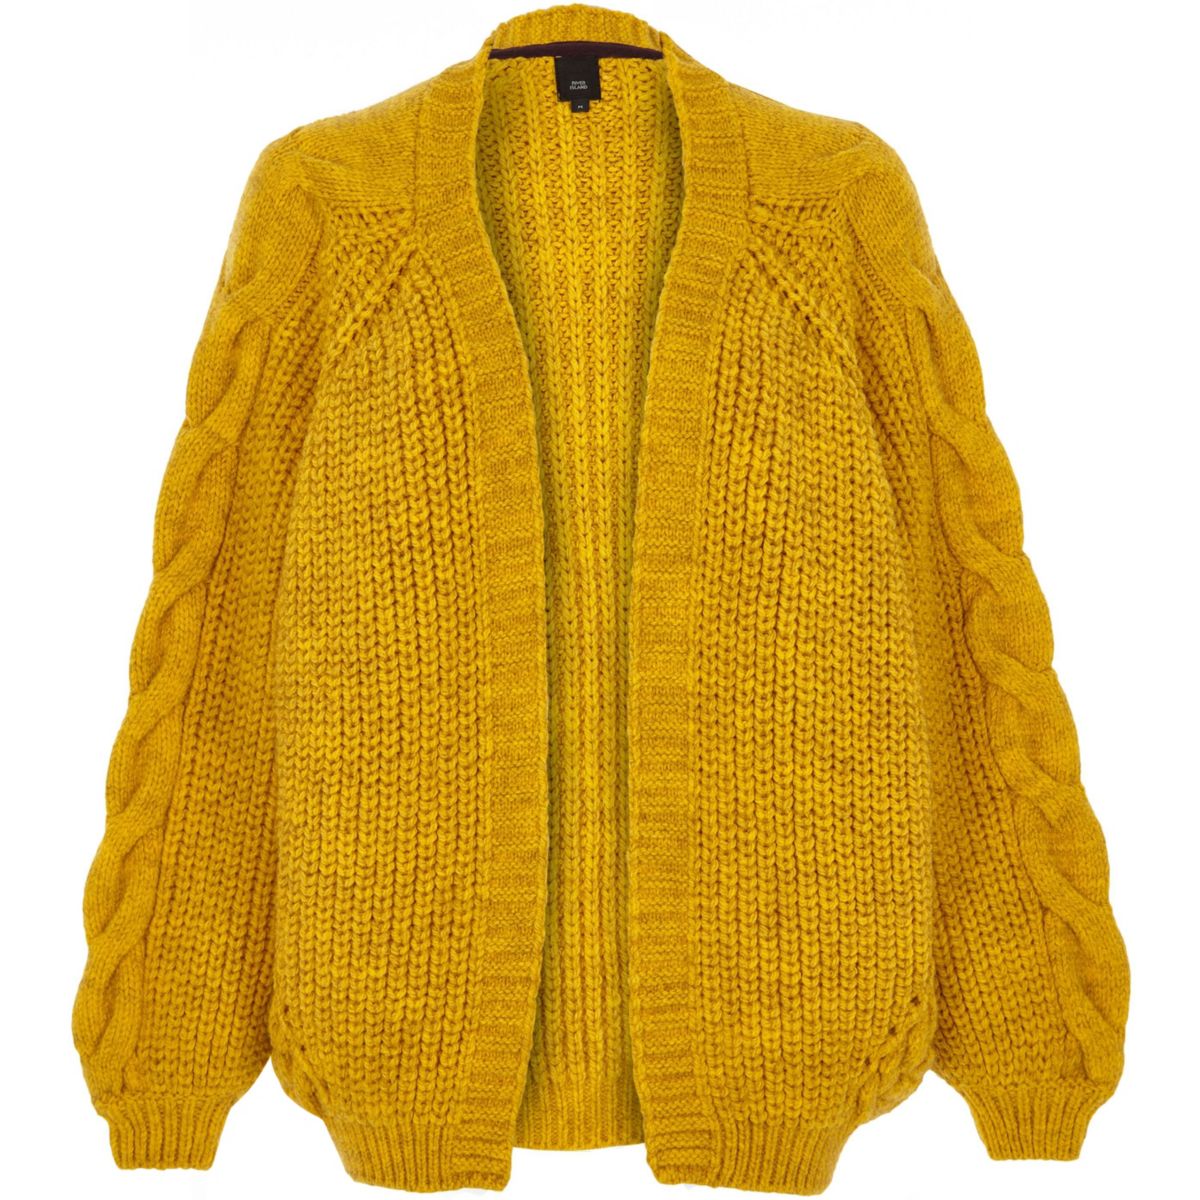  Mustard  yellow chunky cable knit cardigan  Knitwear 